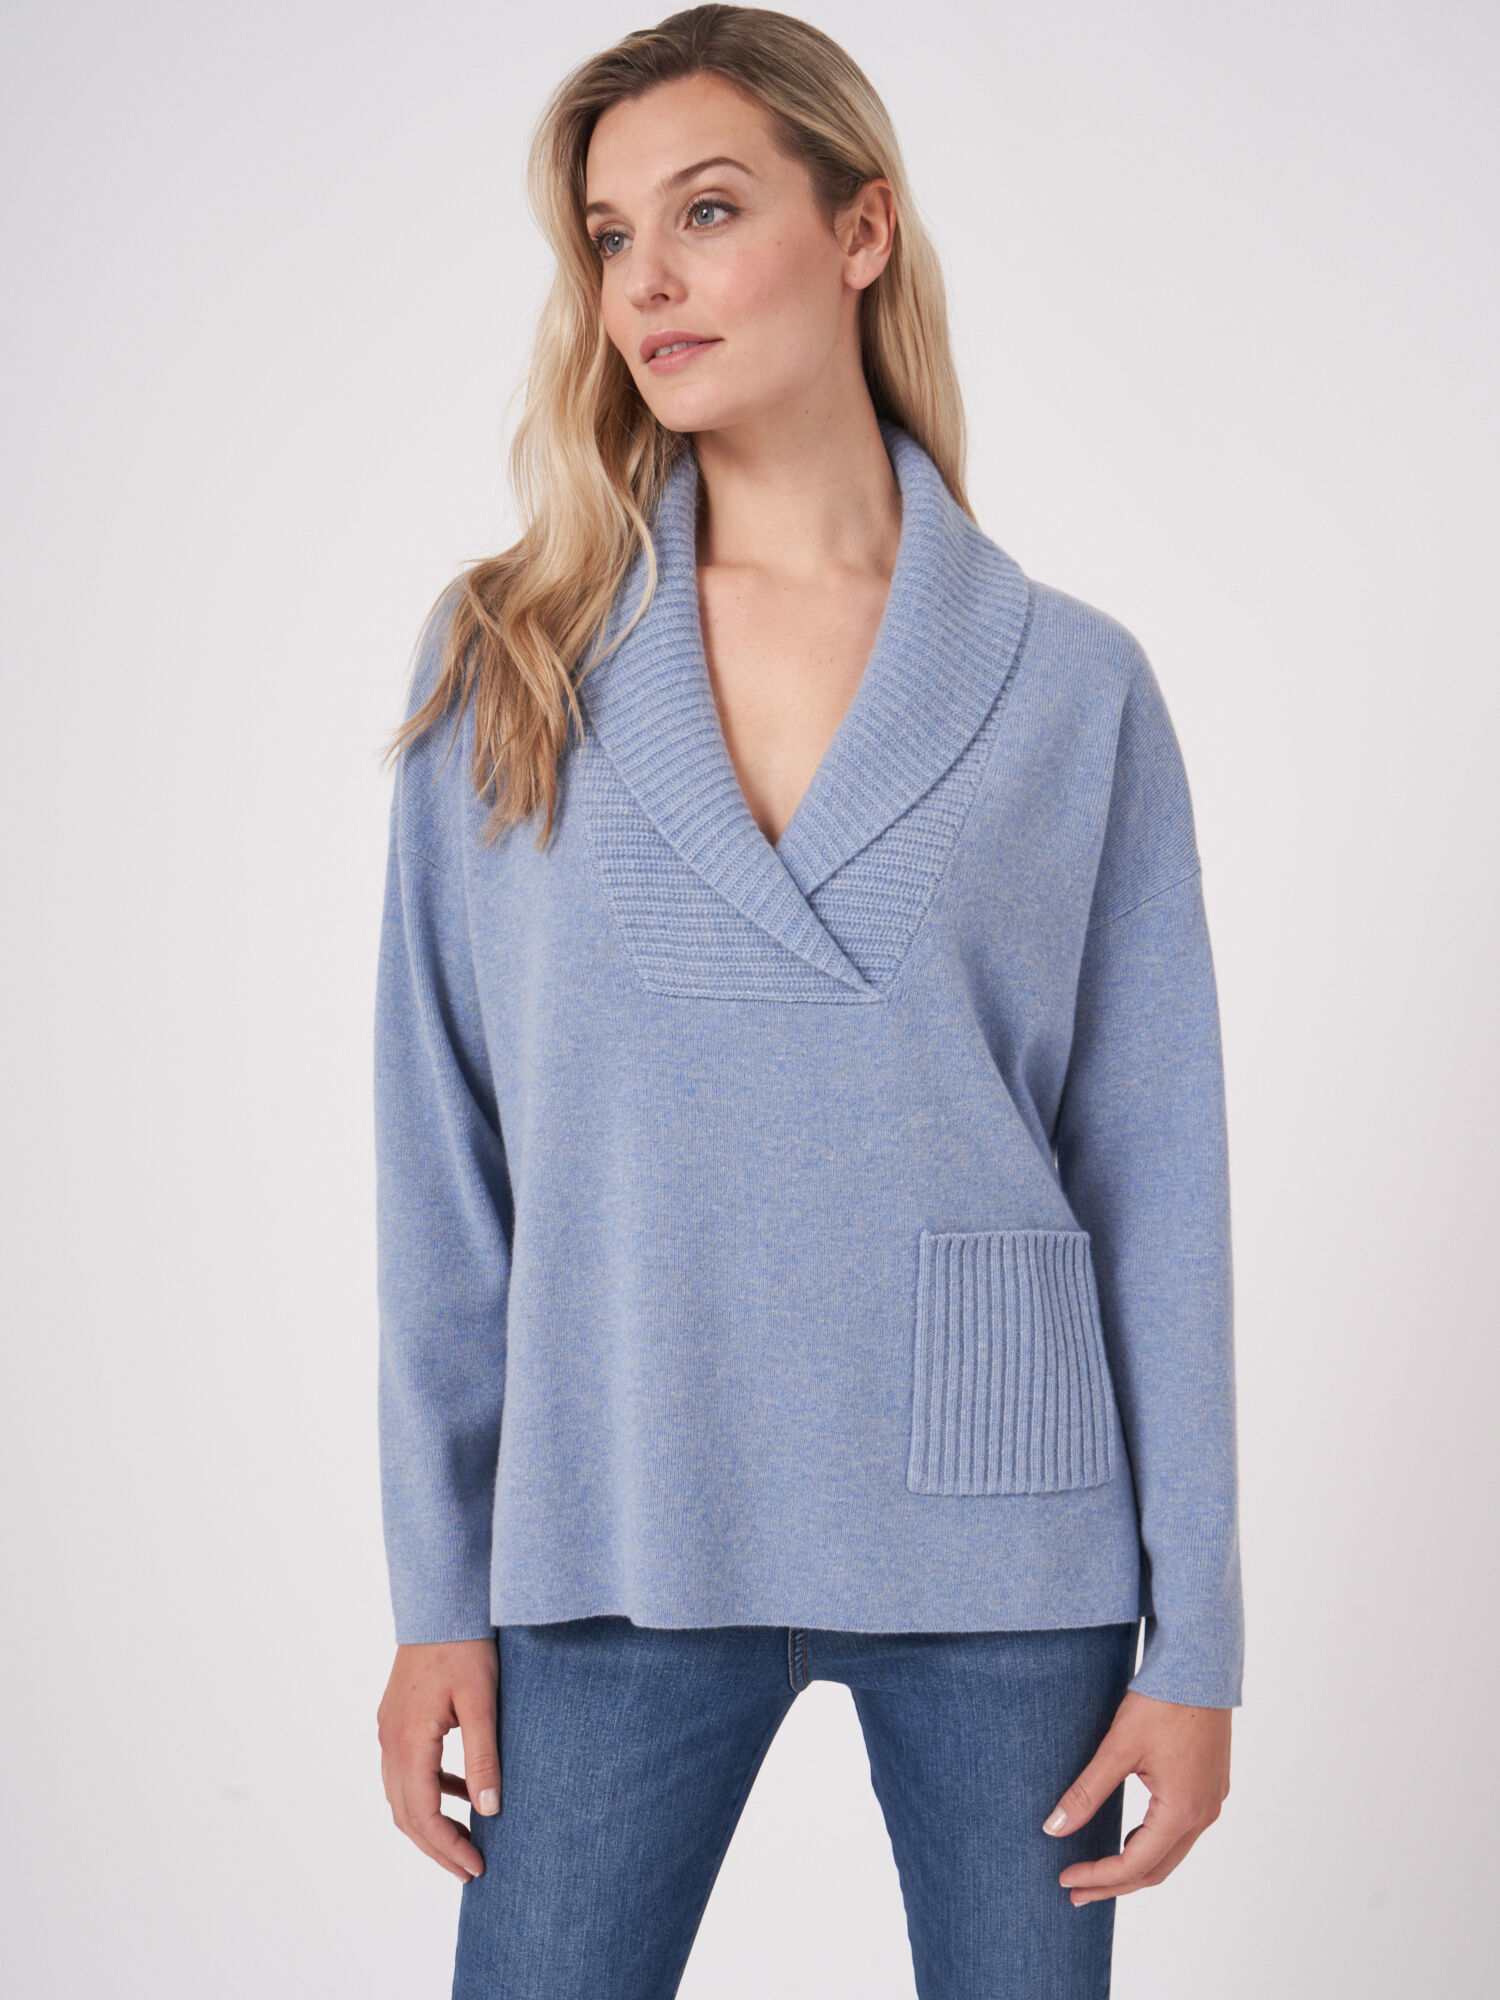 Lambswool sweater with shawl collar